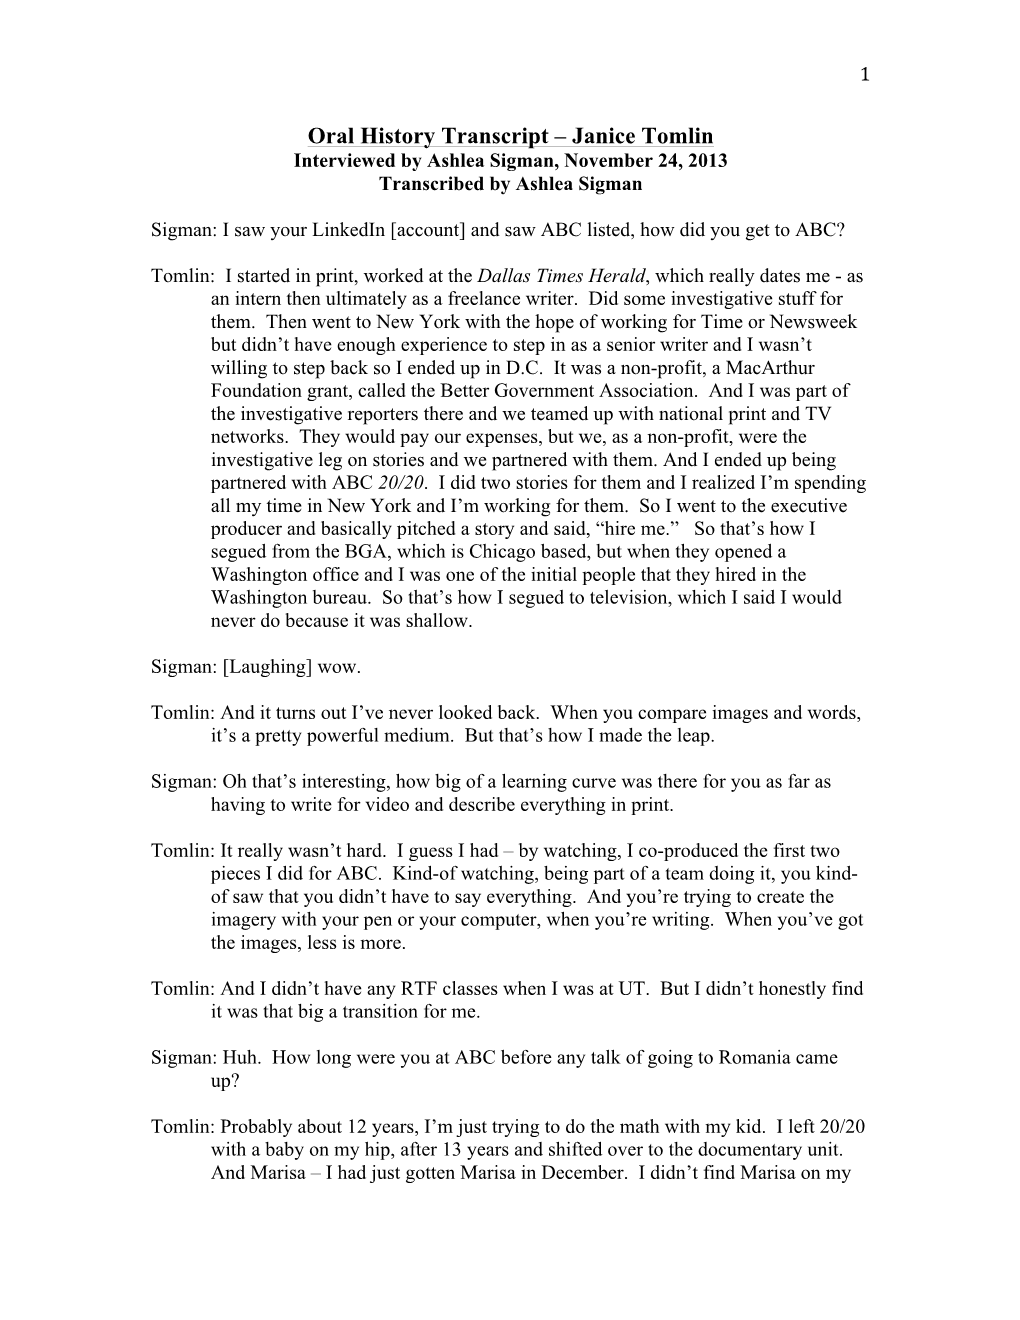 Janice Tomlin Interviewed by Ashlea Sigman, November 24, 2013 Transcribed by Ashlea Sigman